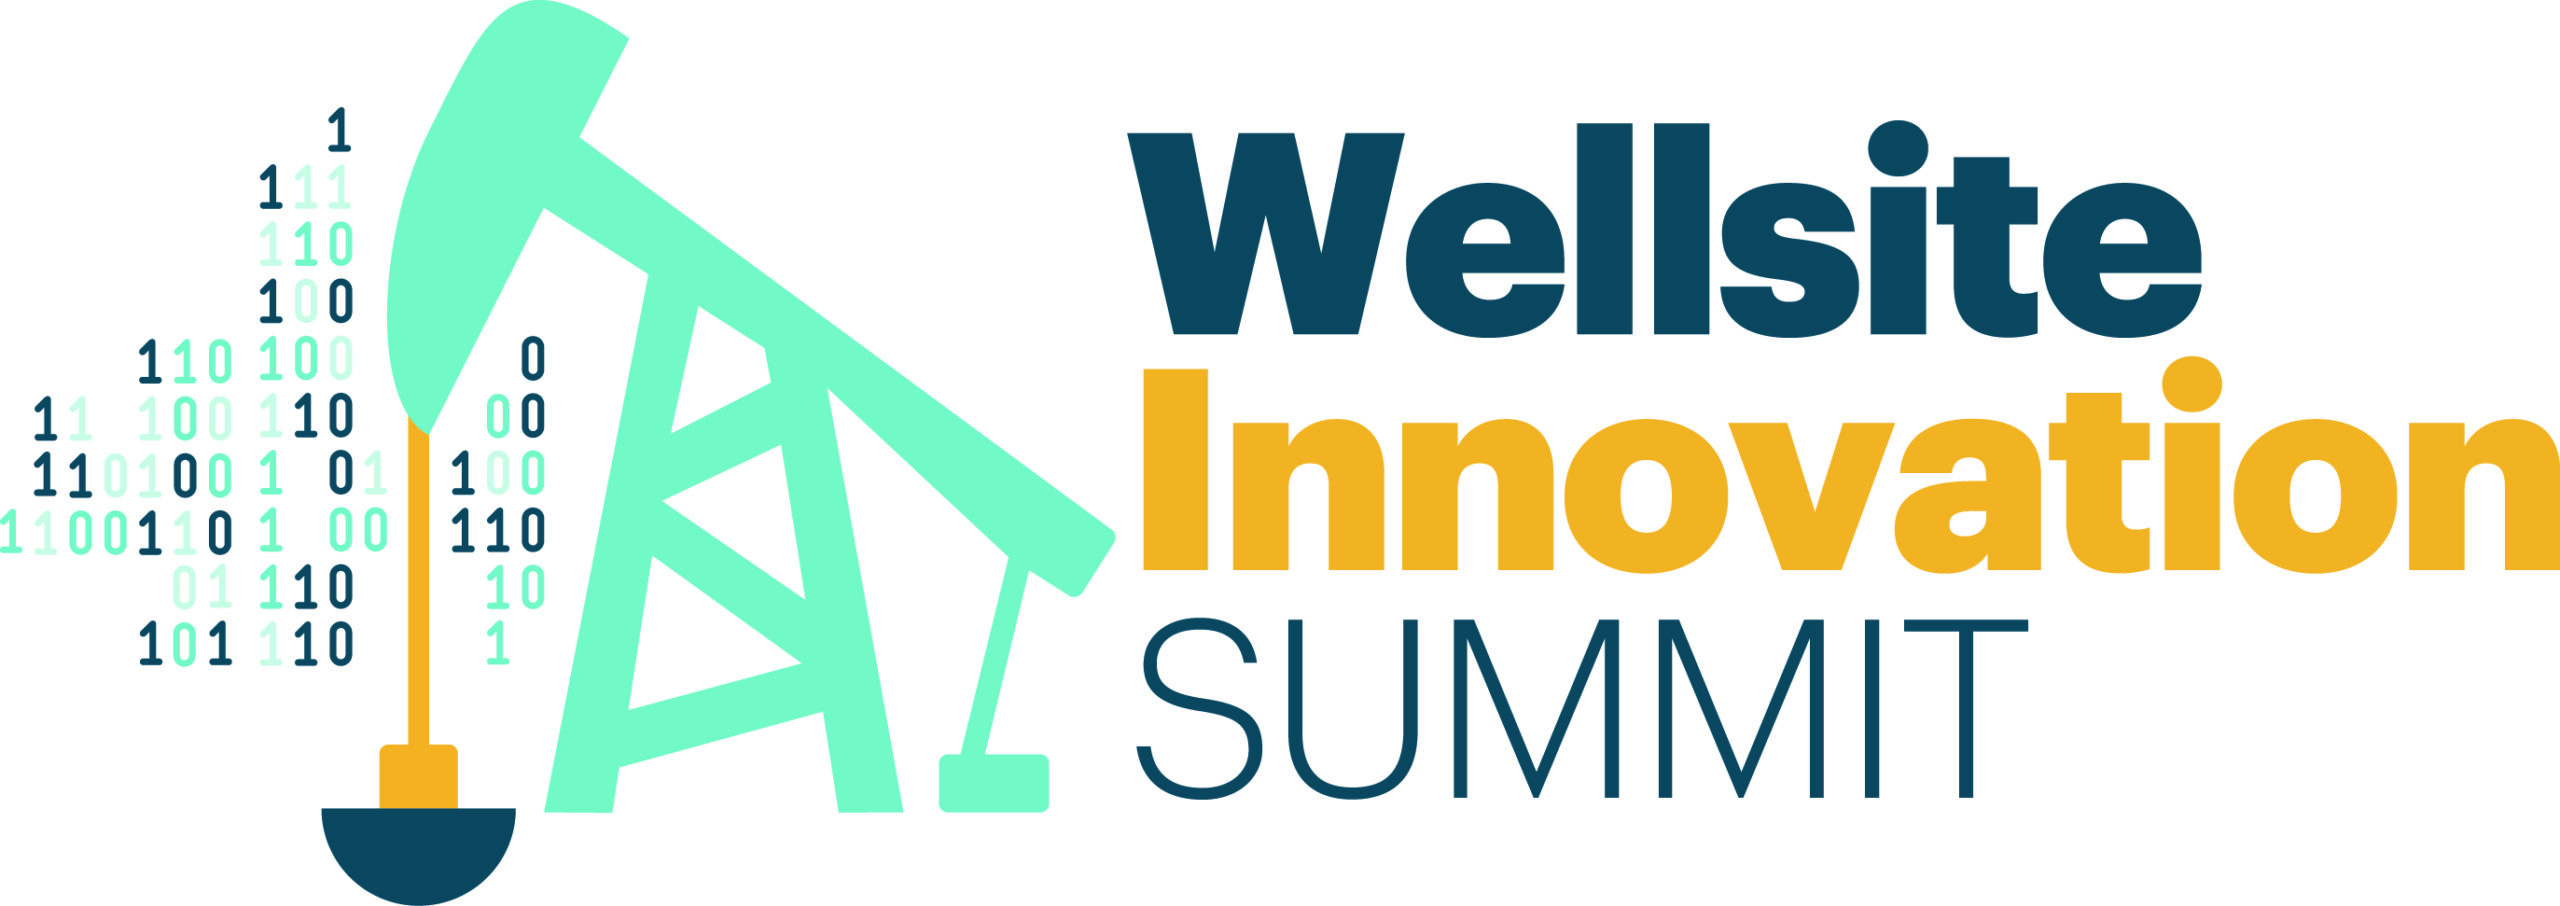 Wellsite Innovation Summit